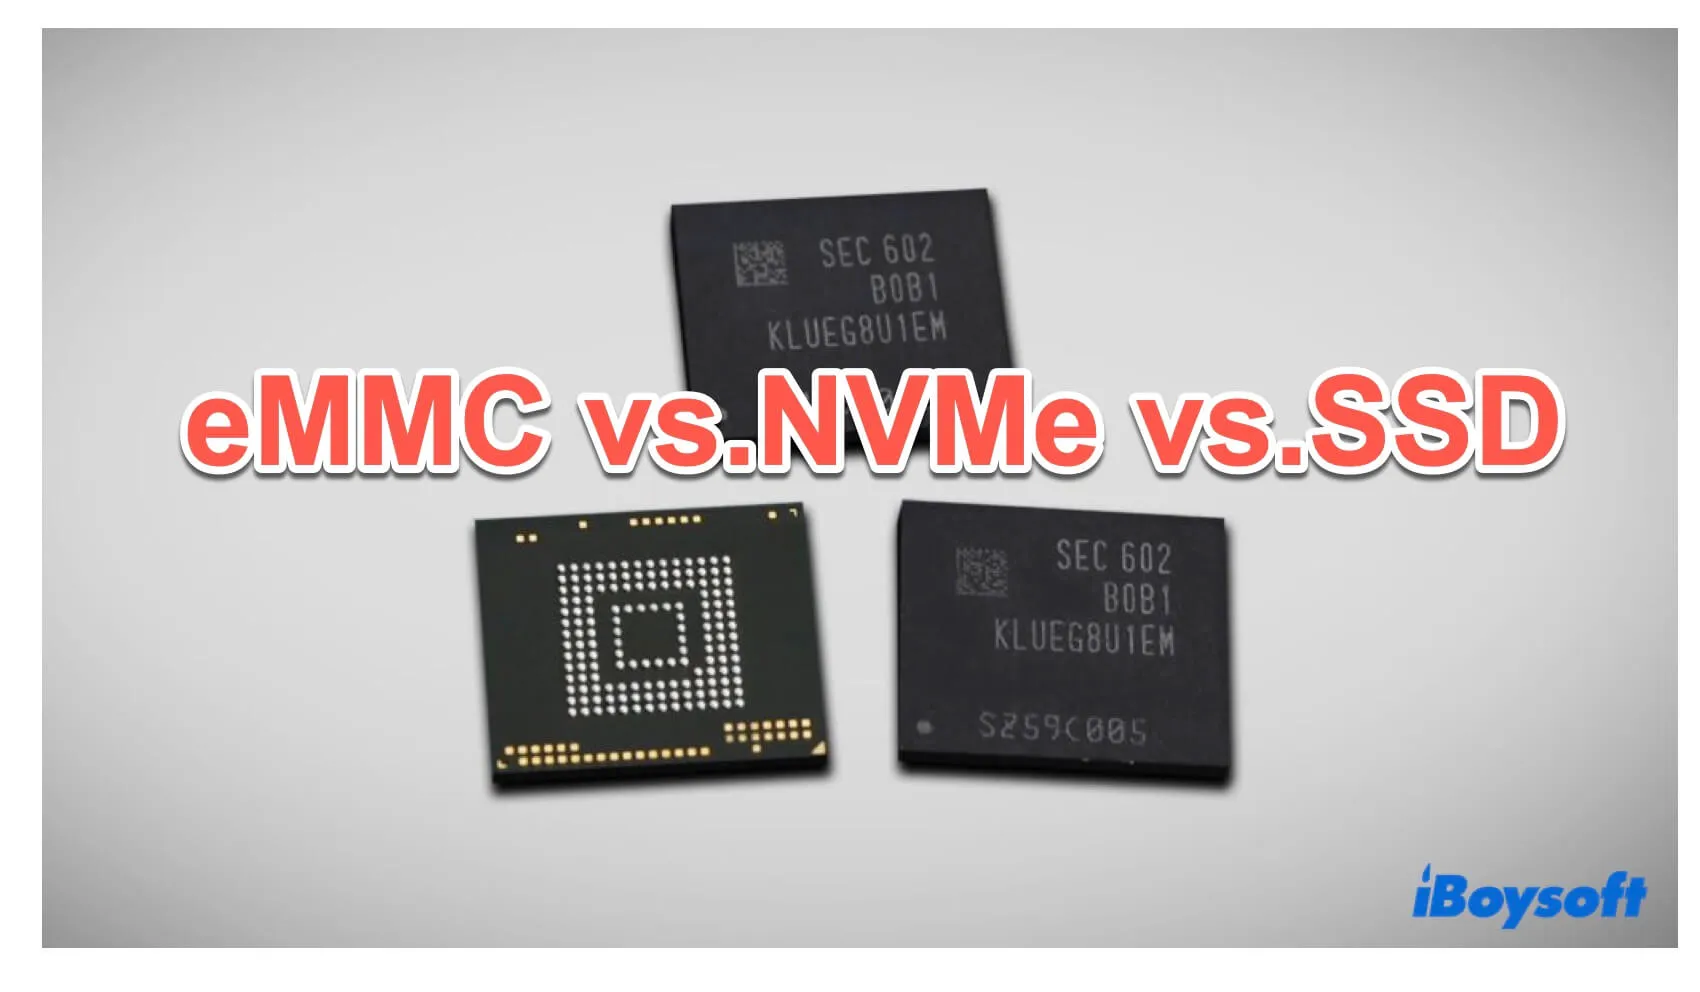 eMMC vs NVMe and eMMC vs SSD